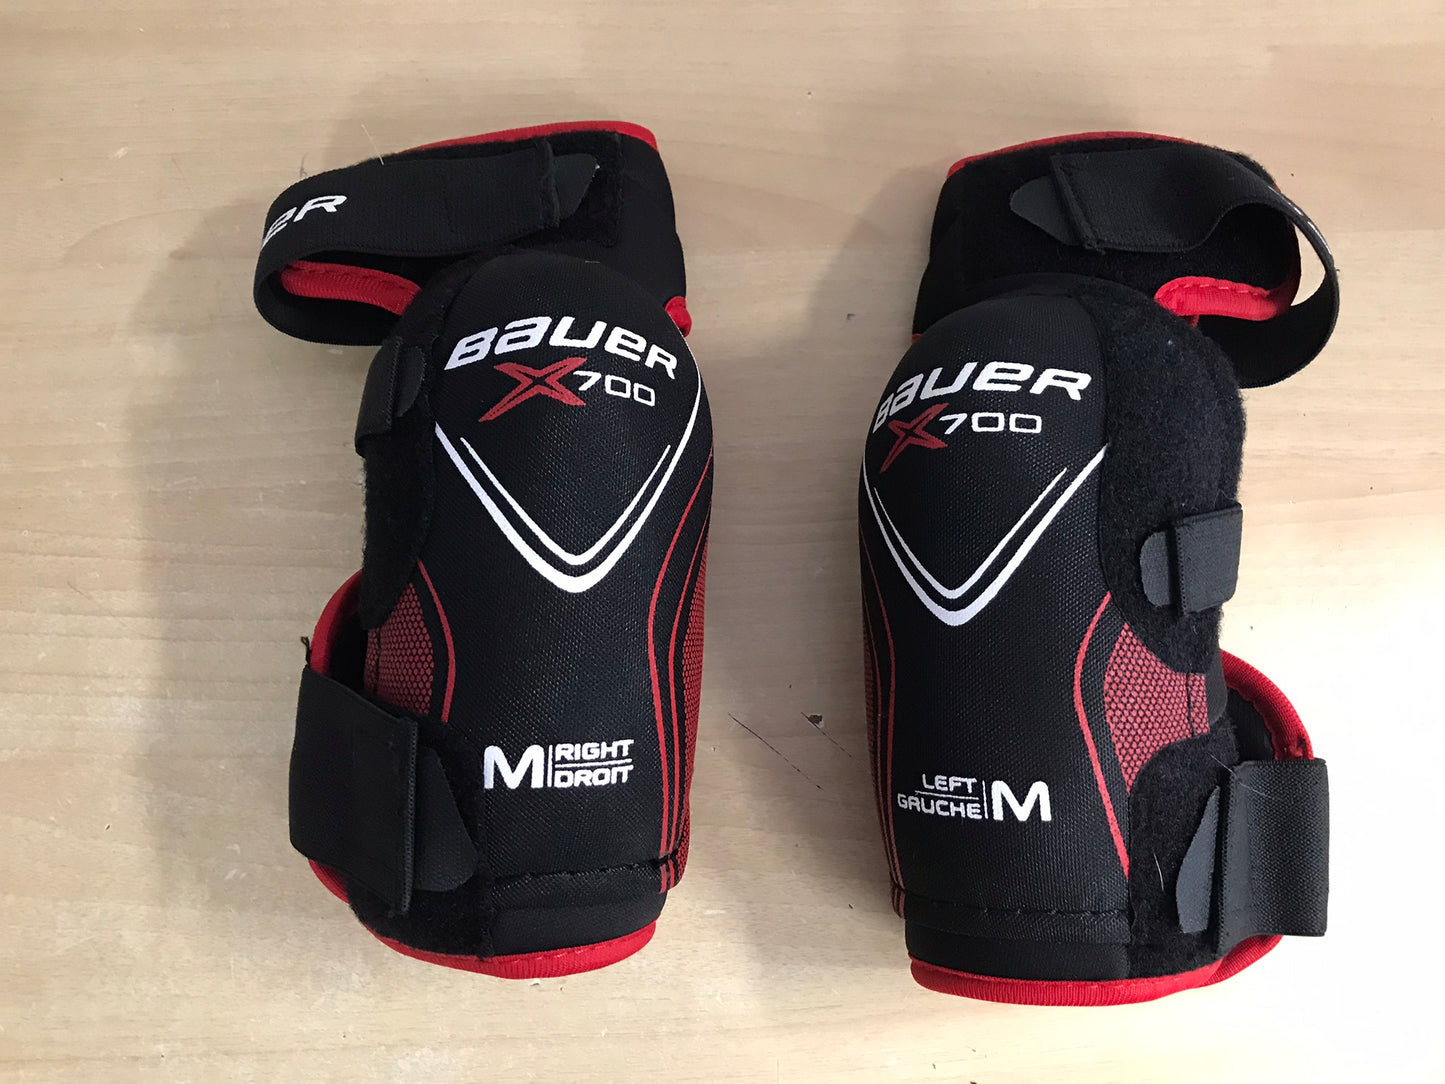 Hockey Elbow Pad Men's Size Medium Bauer Vapor X700 Black Red New Demo Model